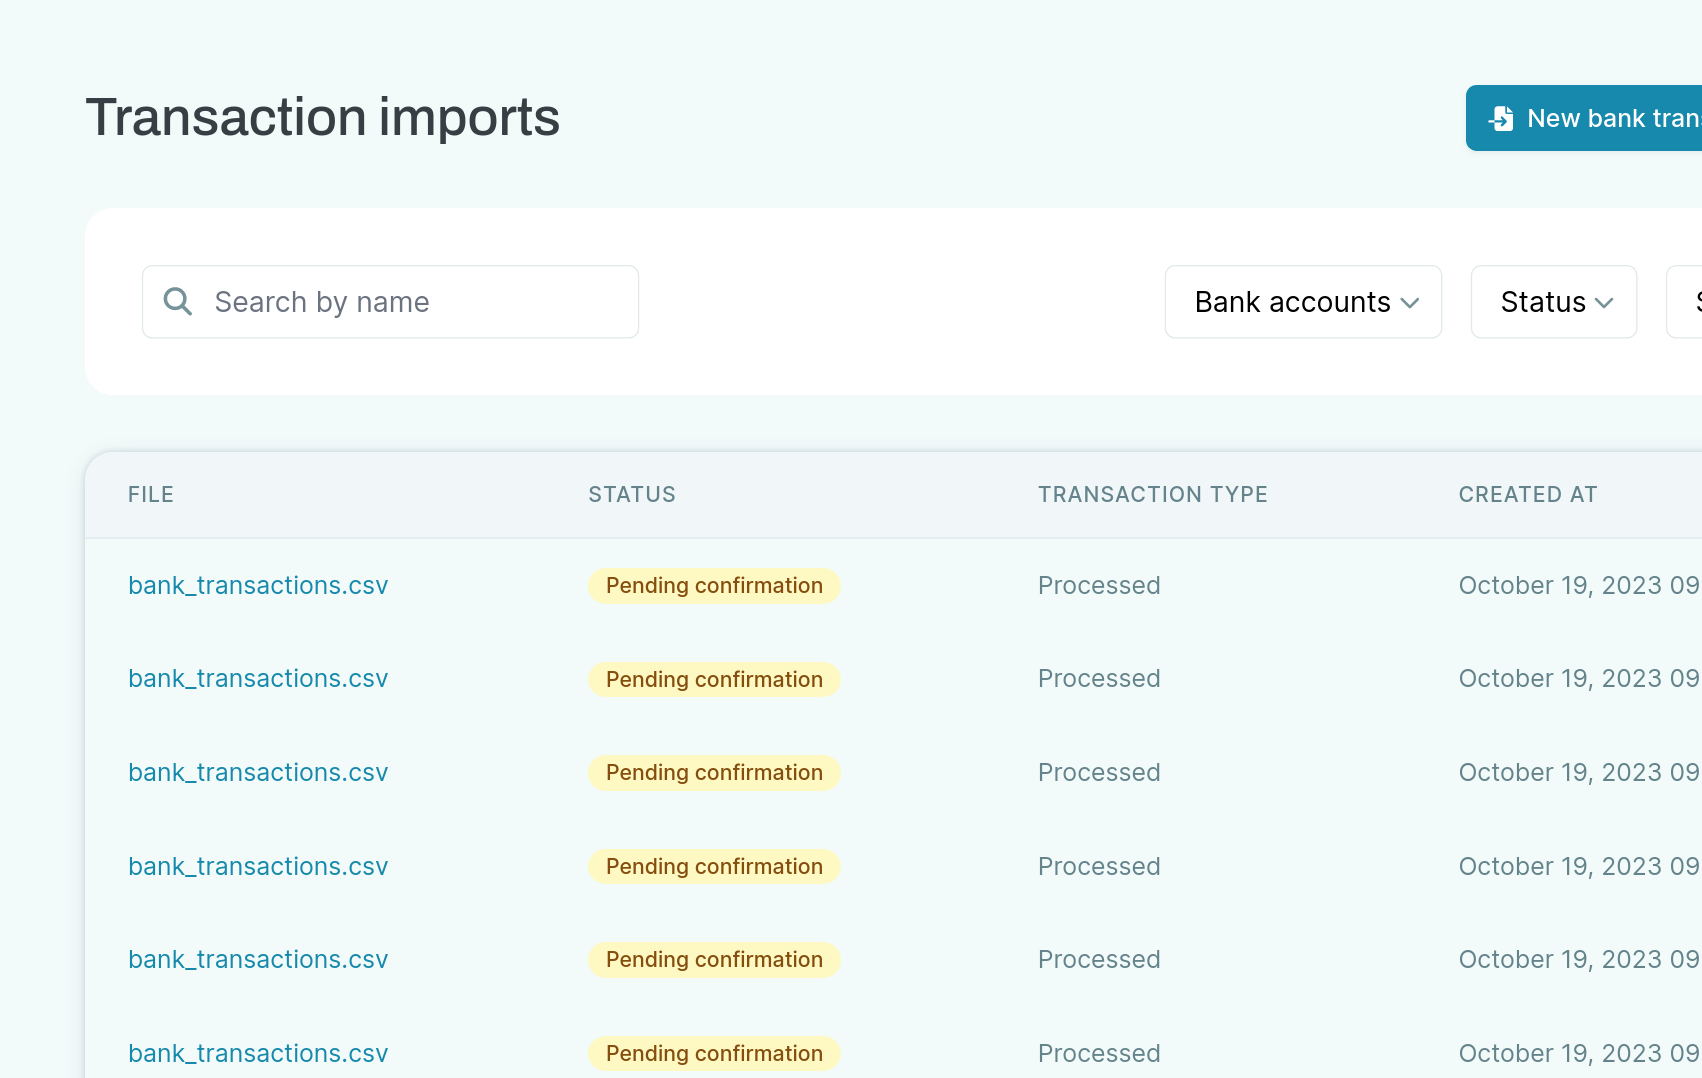 A screenshot of importing bank transactions